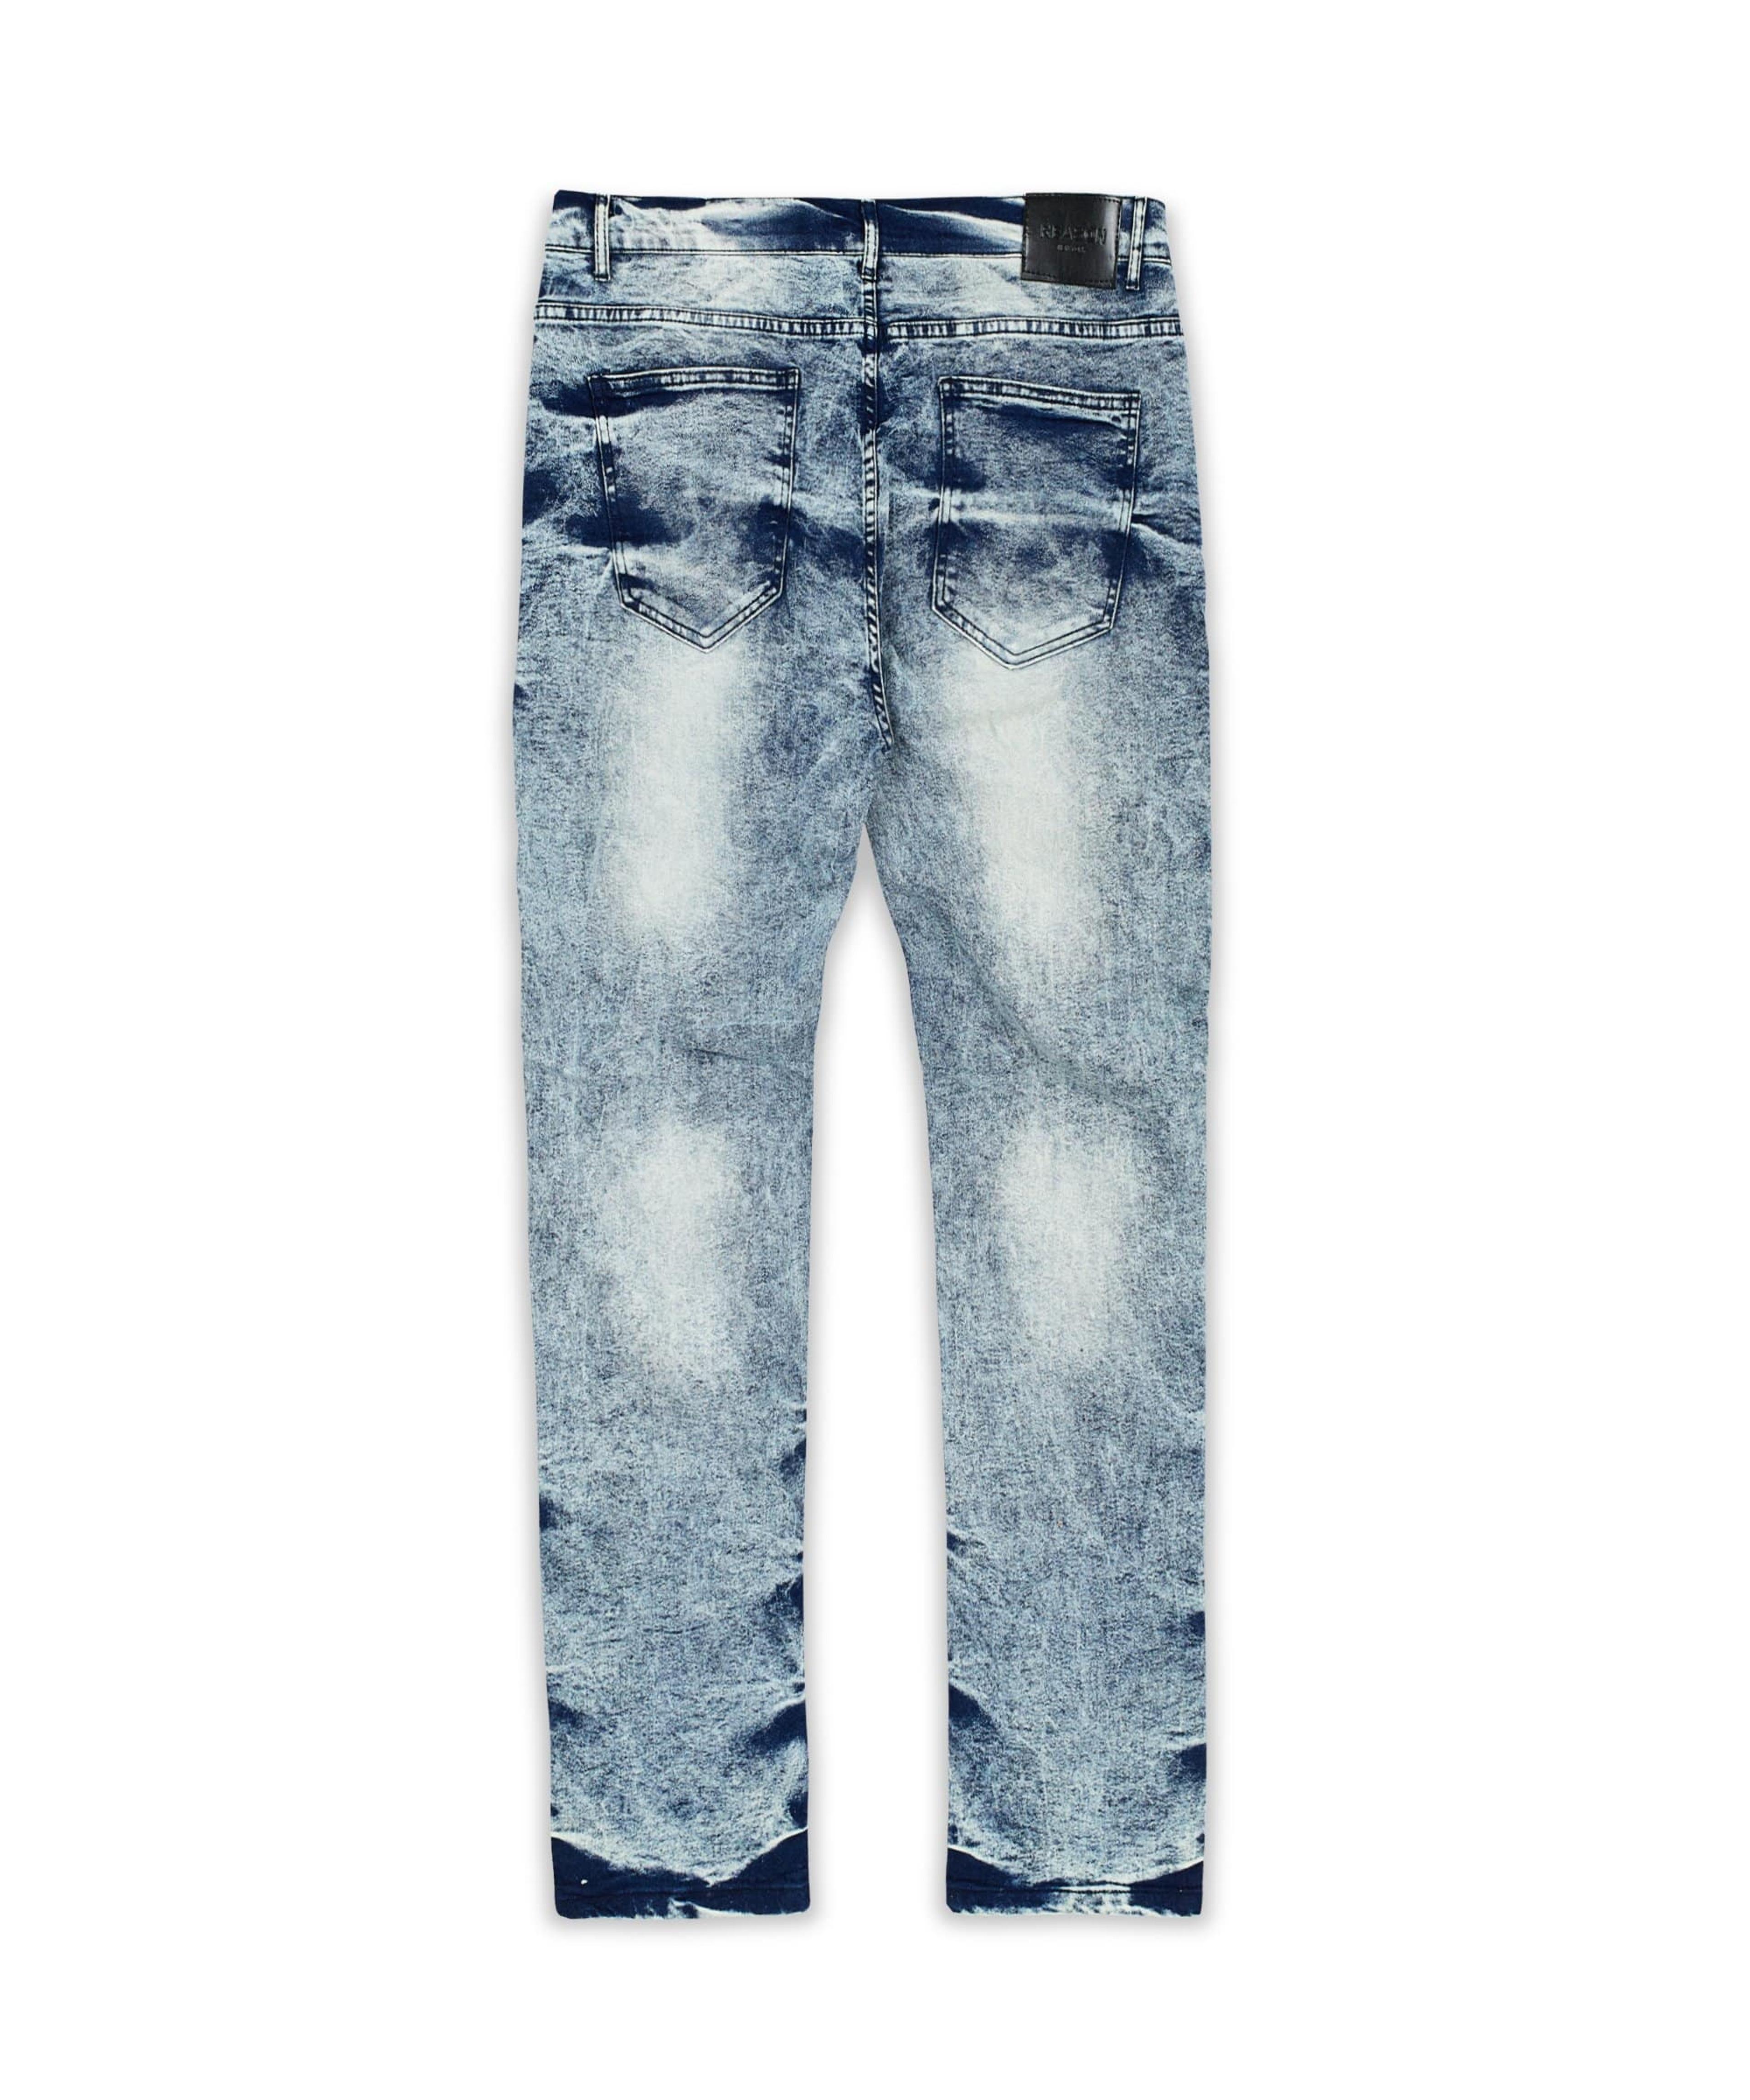 Alternate View 1 of Plus Size Wright Medium Wash Moto Jeans